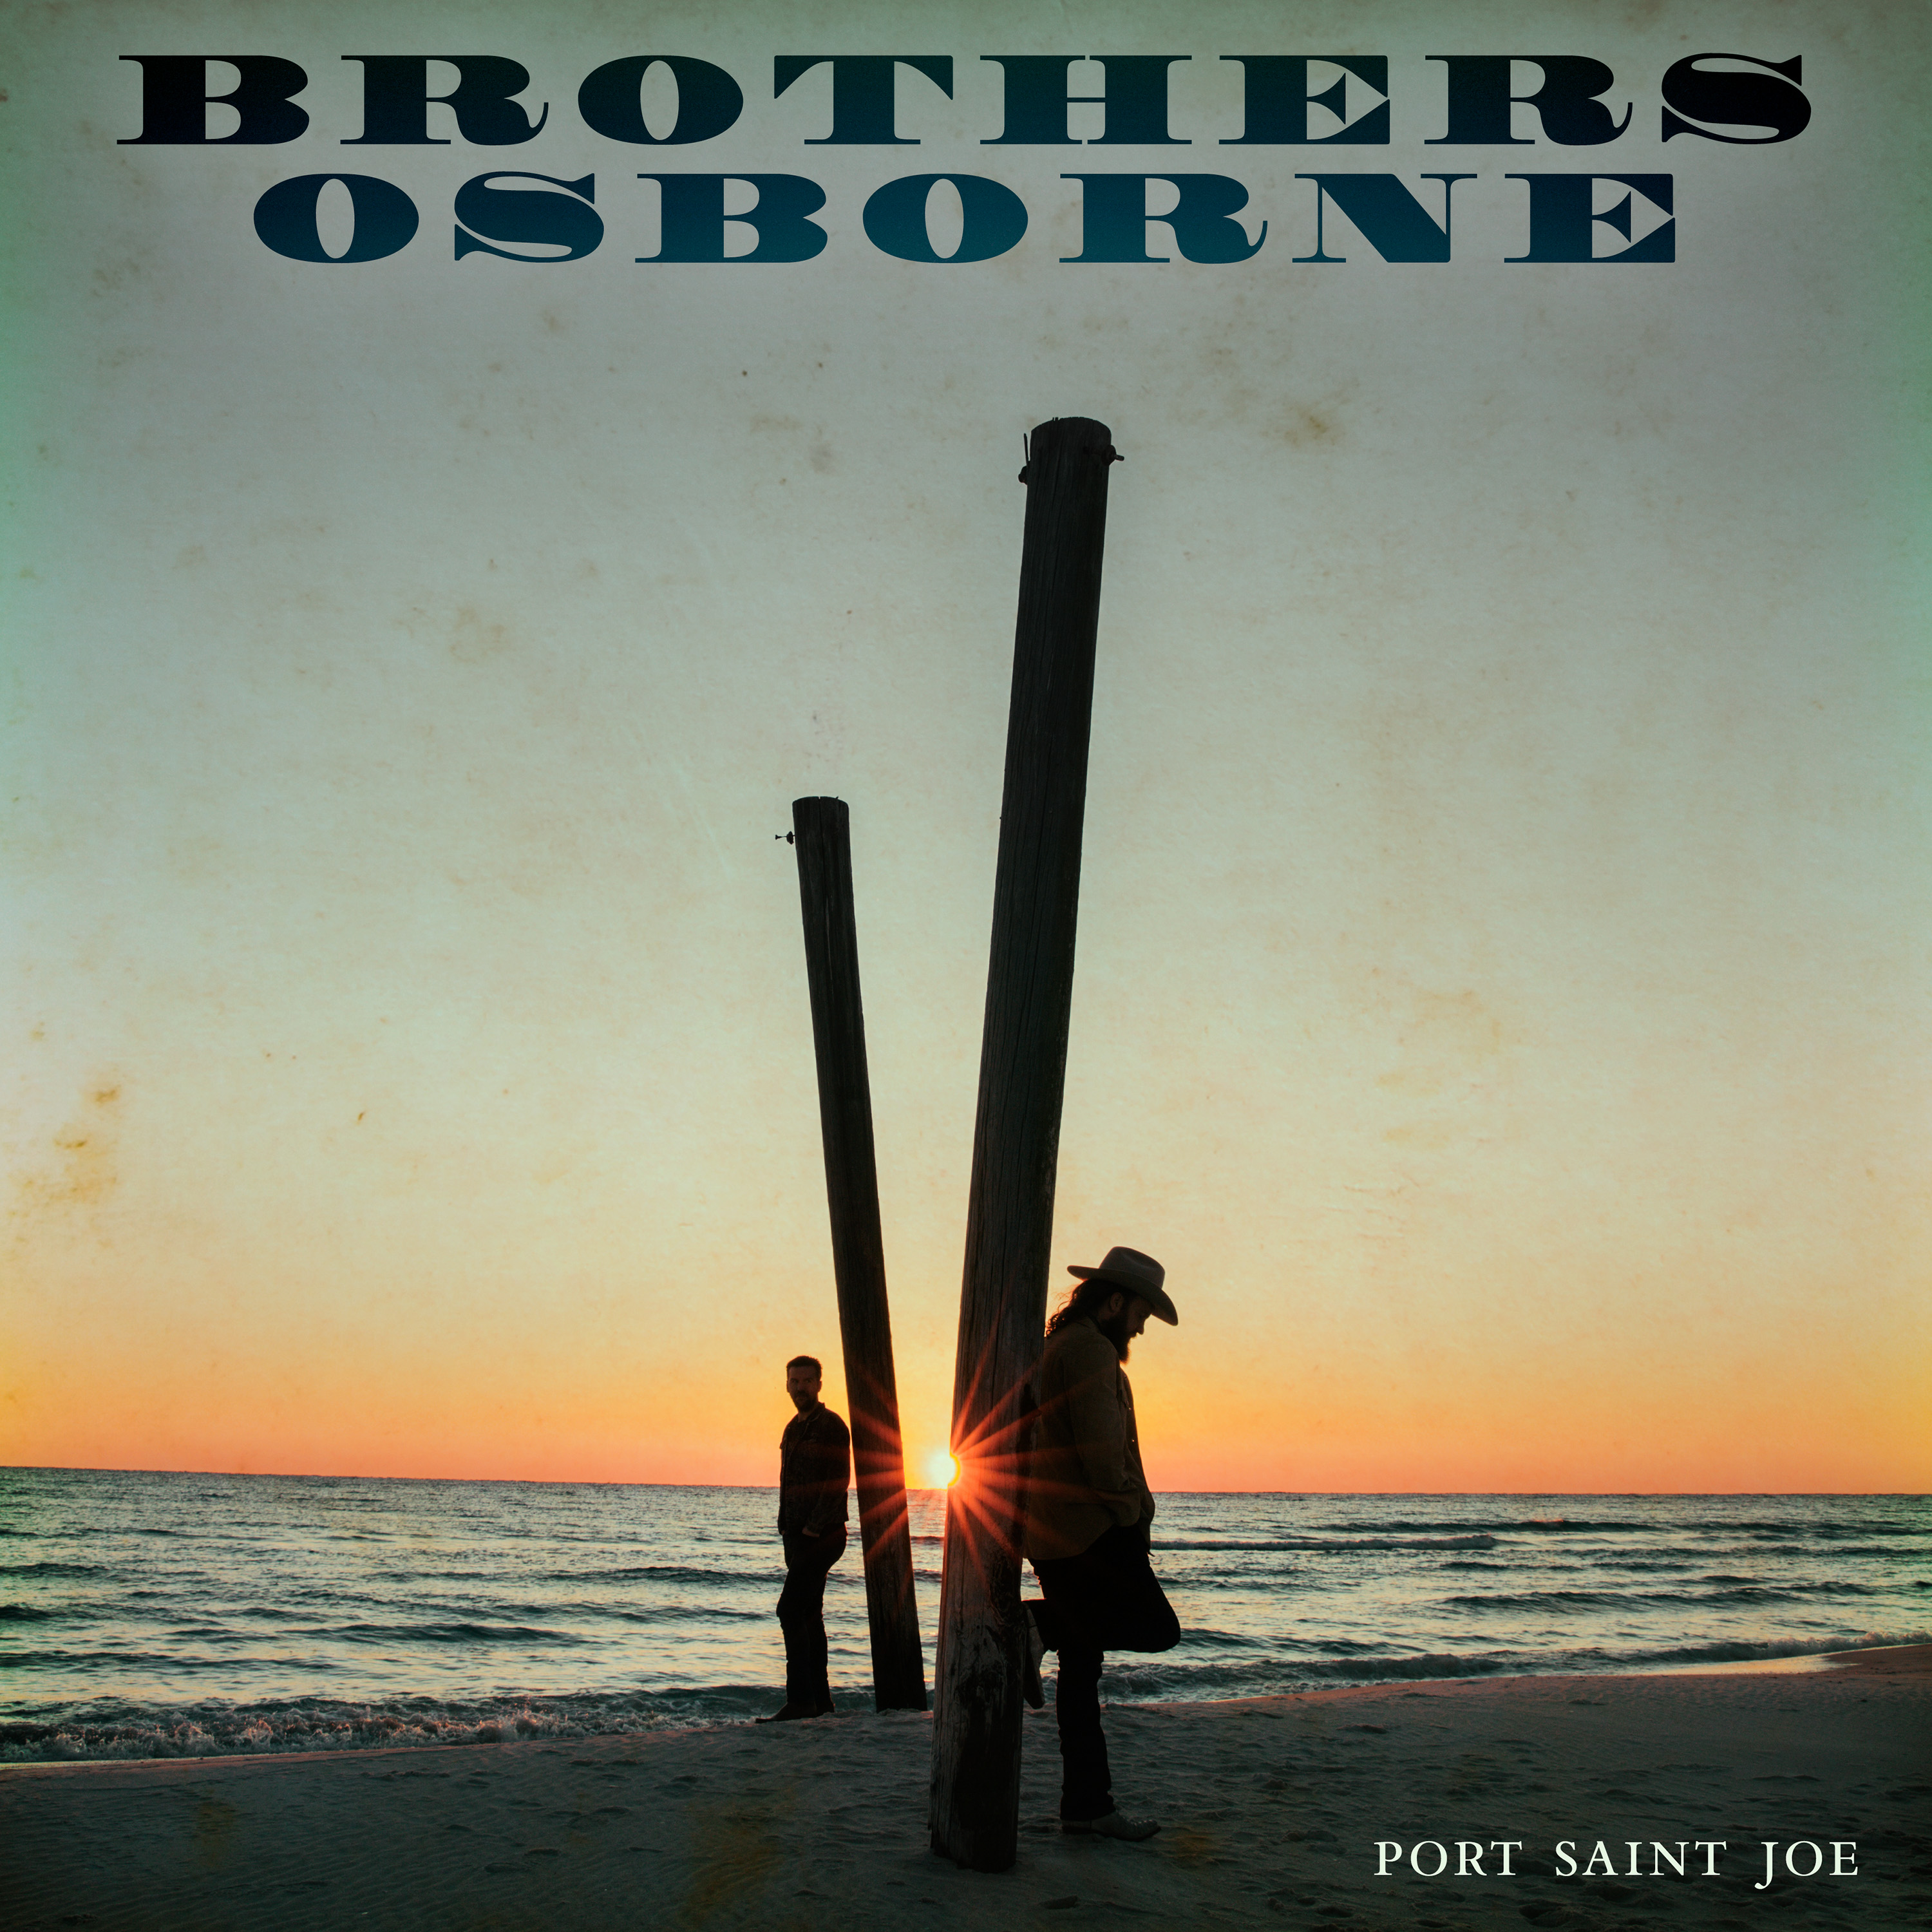 Brothers Osborne Drop New Album Today – Listen to “Port Saint Joe” Now